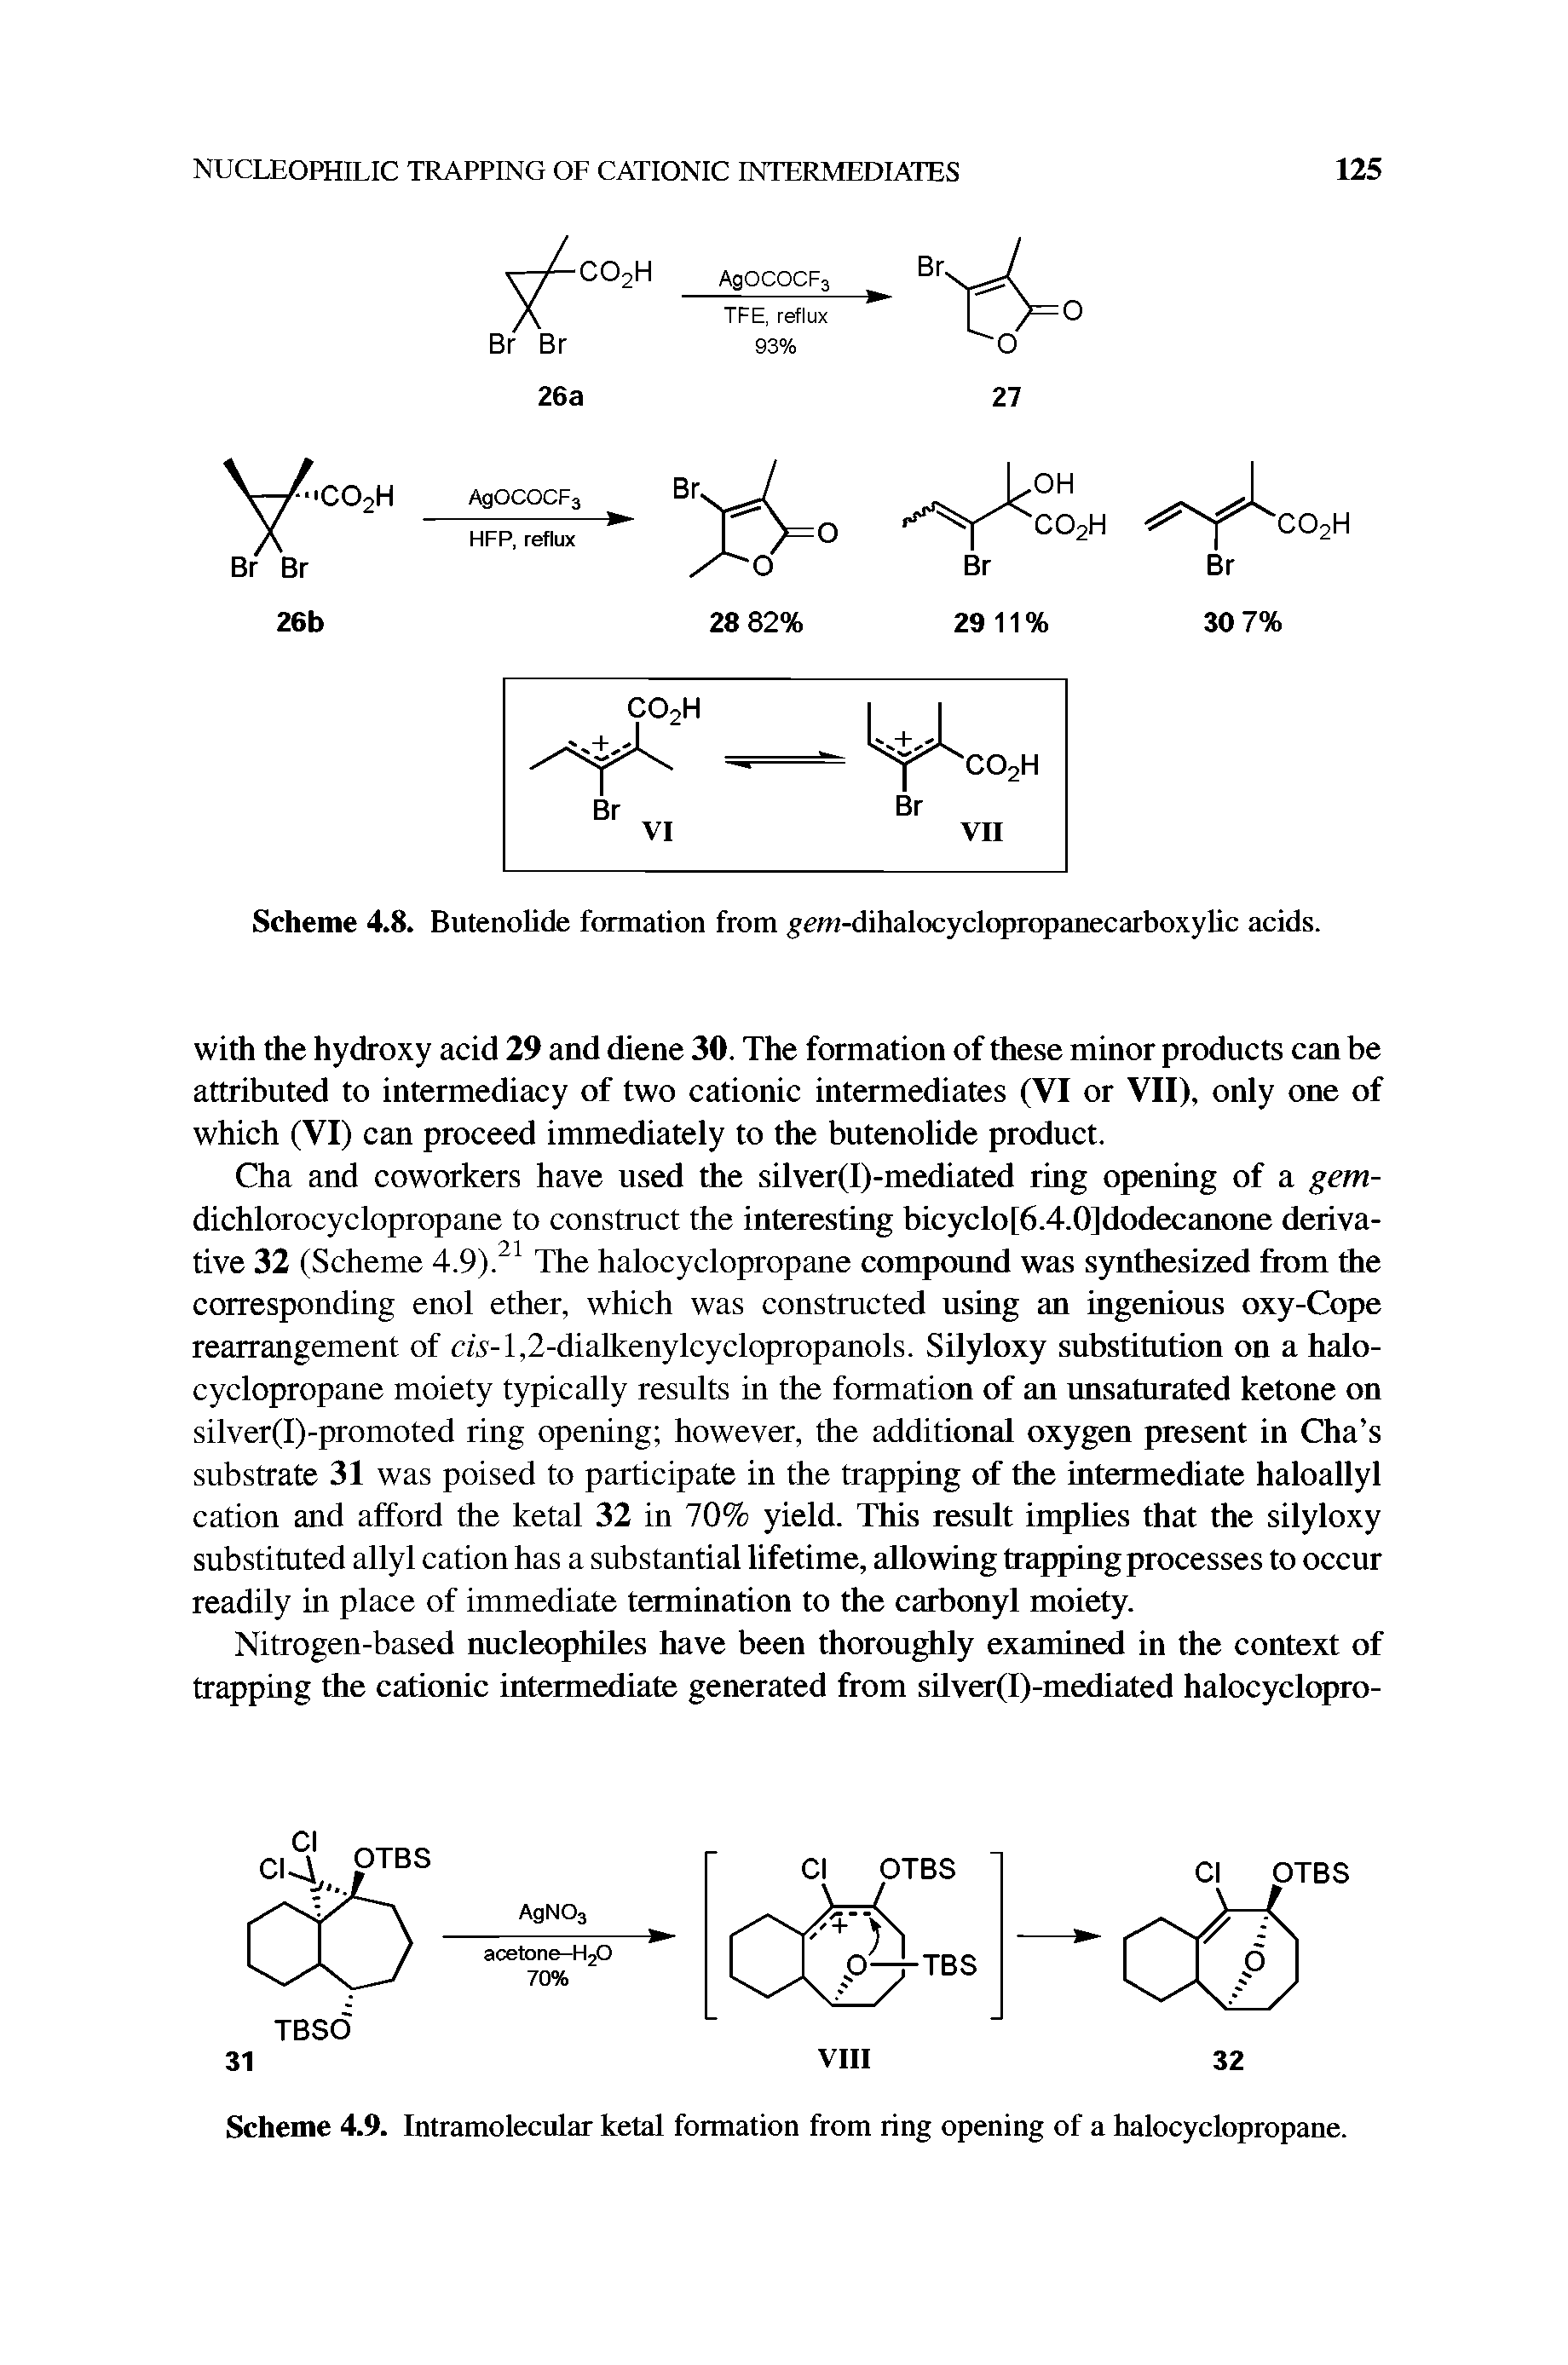 Scheme 4.8. Butenolide formation from gem-dihalocyclopropanecarboxylic acids.